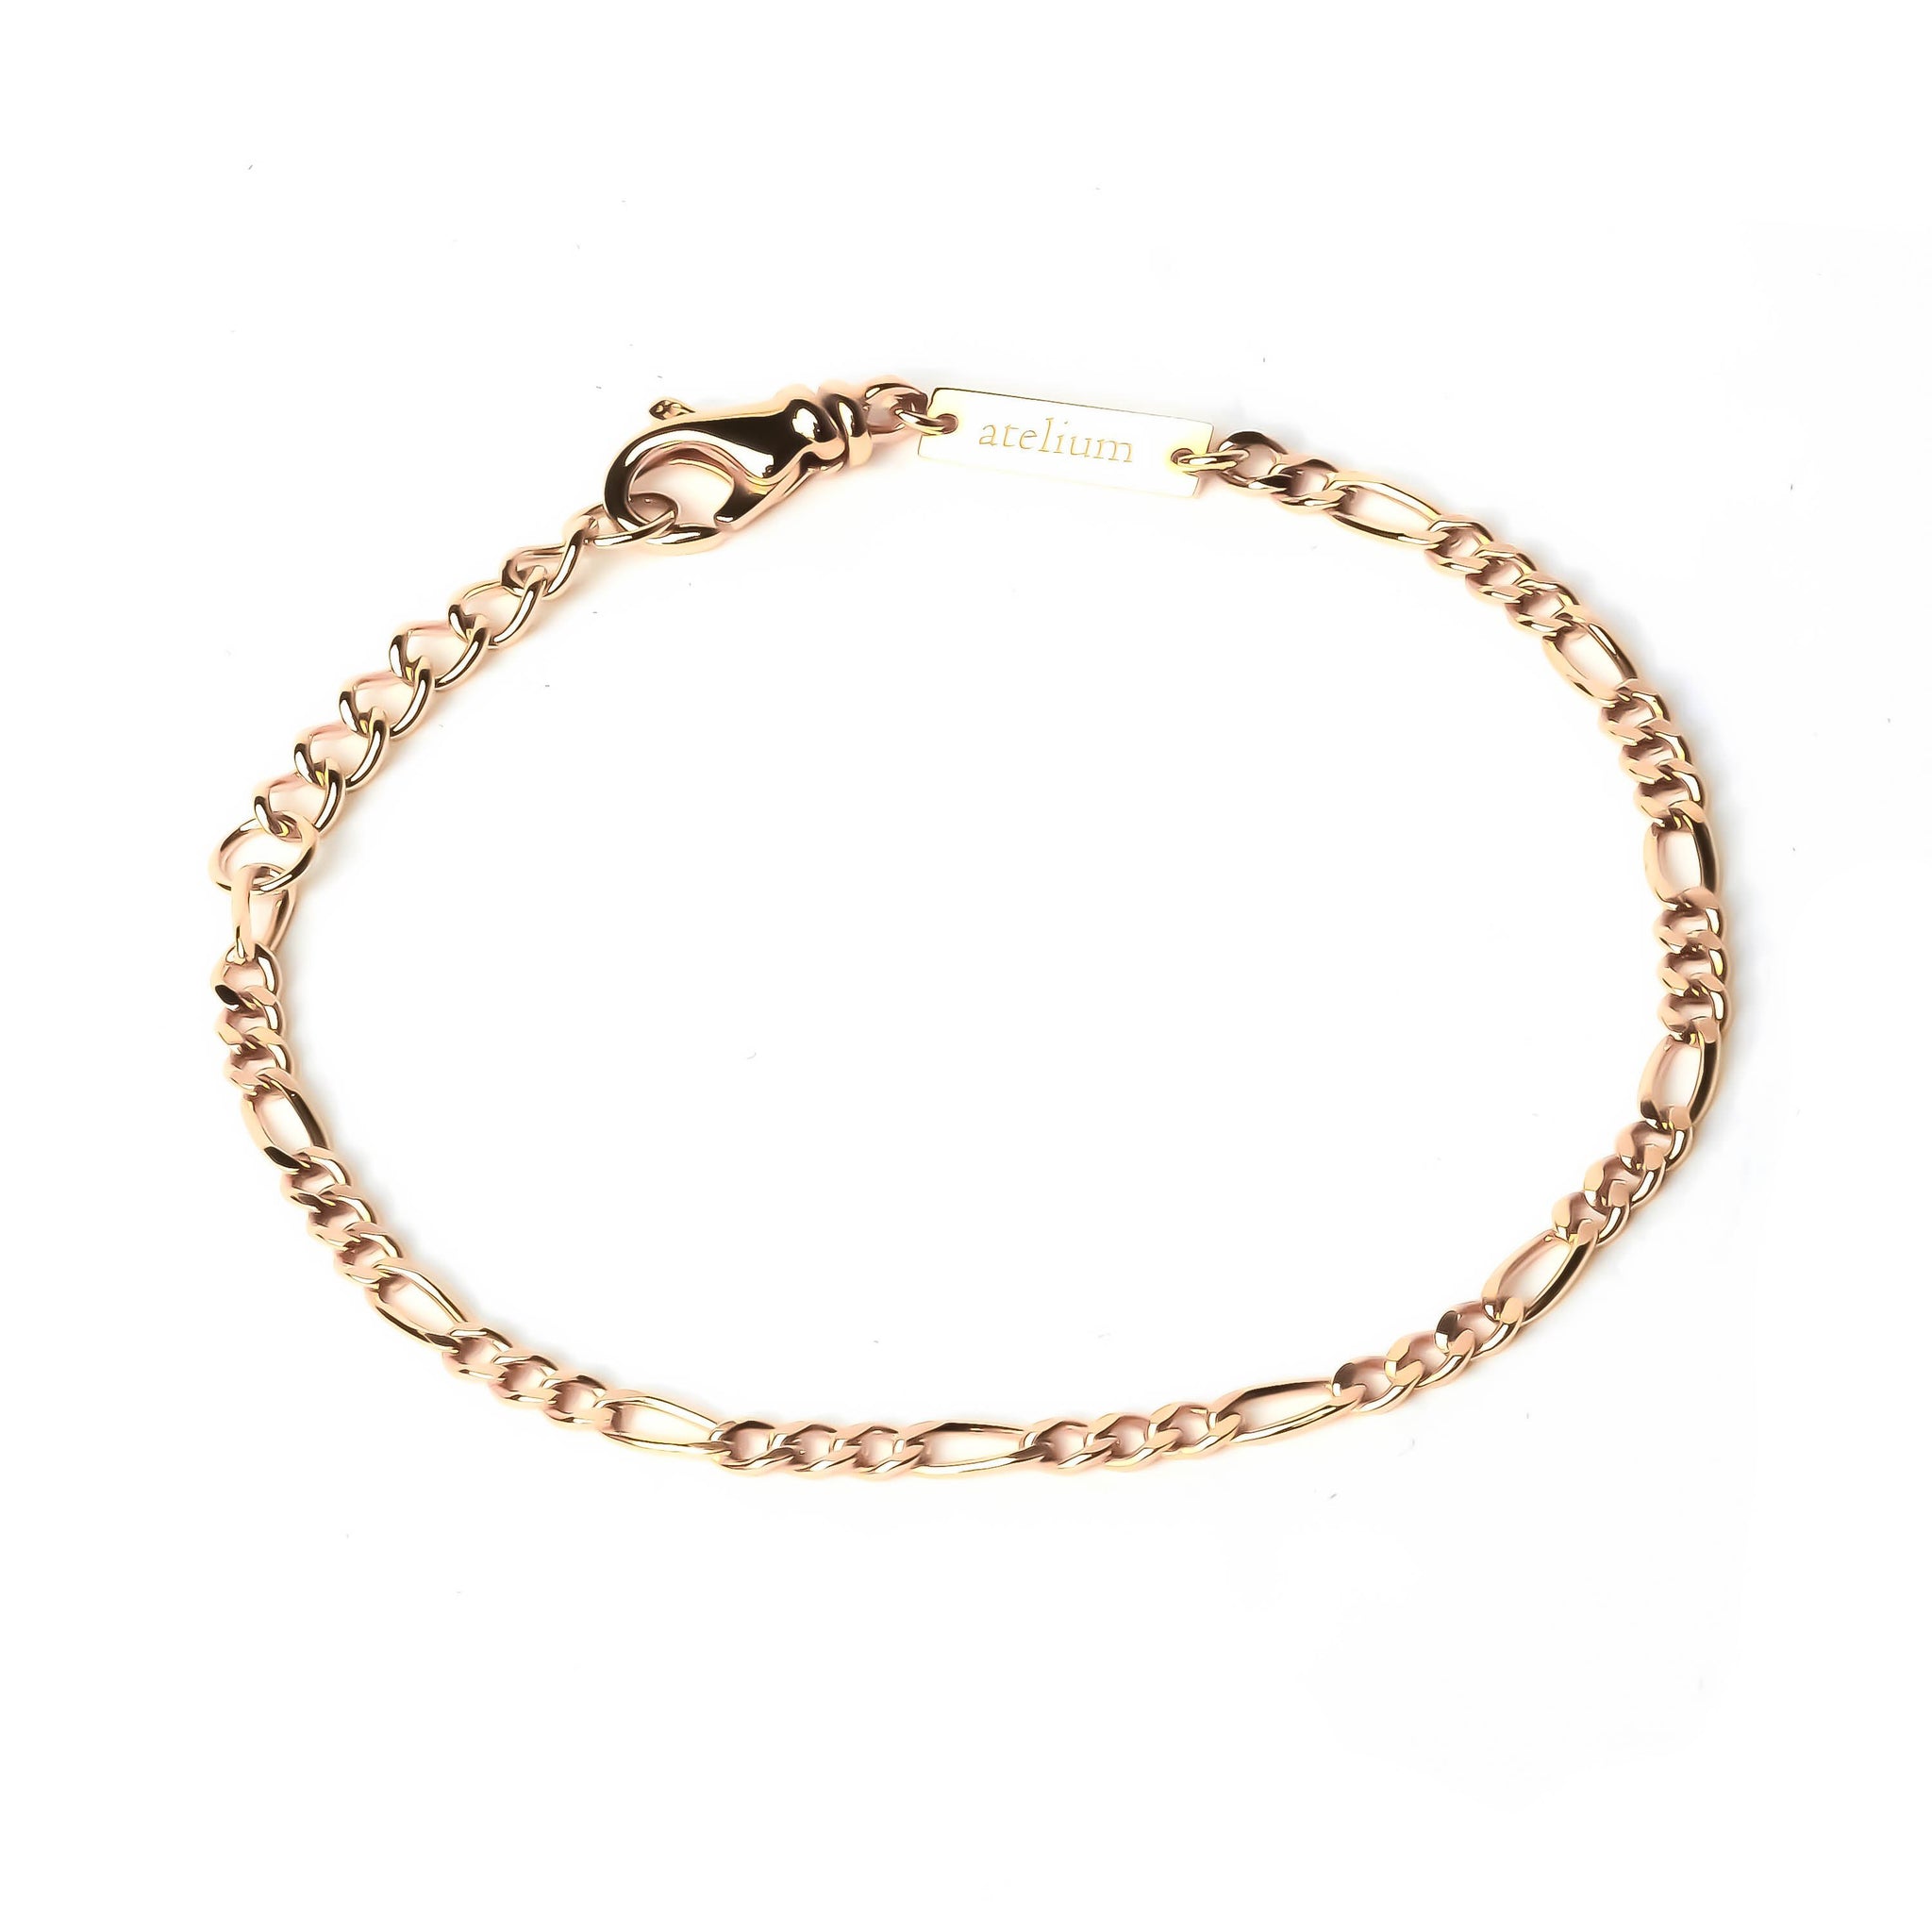 Gold chain linked bracelet